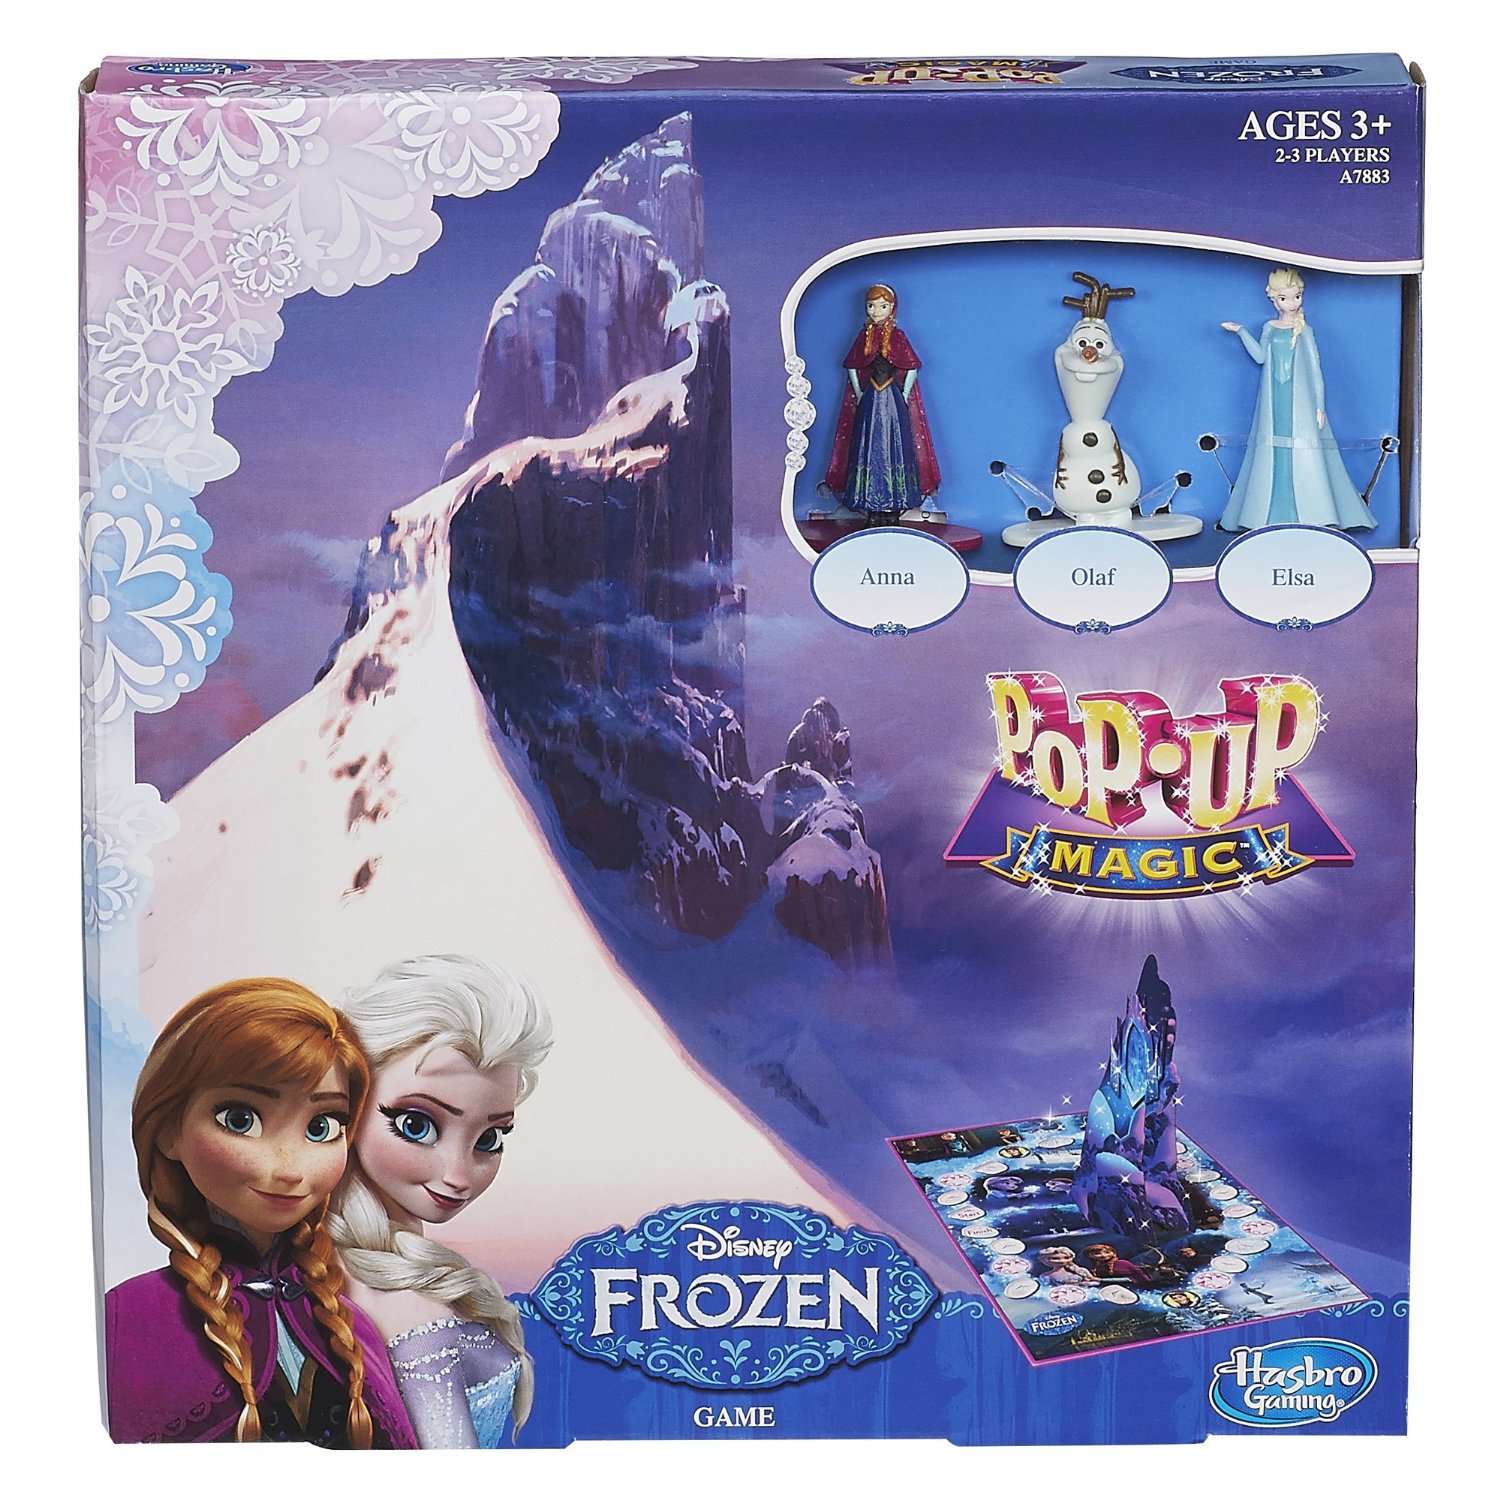 FROZEN Disney Pop-Up Magic Frozen Game - Click Image to Close